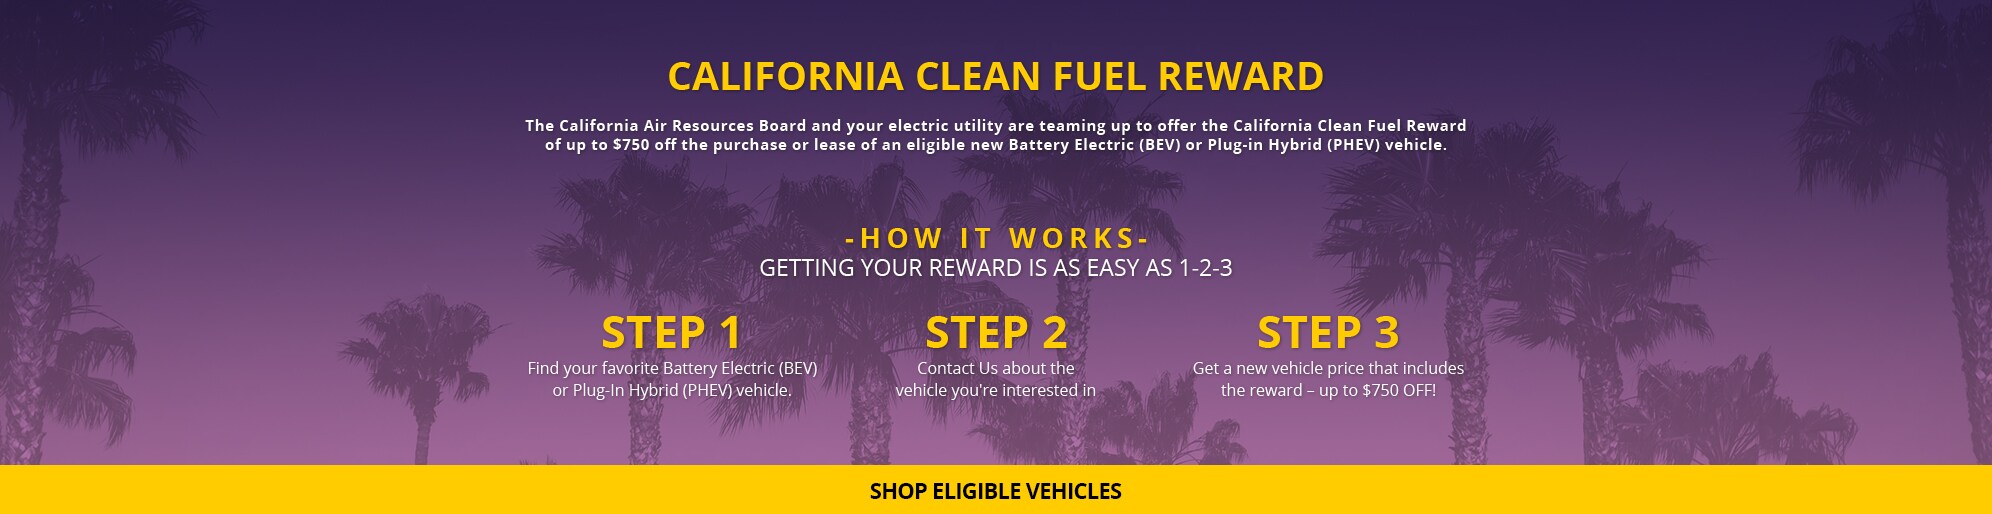 California Clean Fuel Reward Program Banner